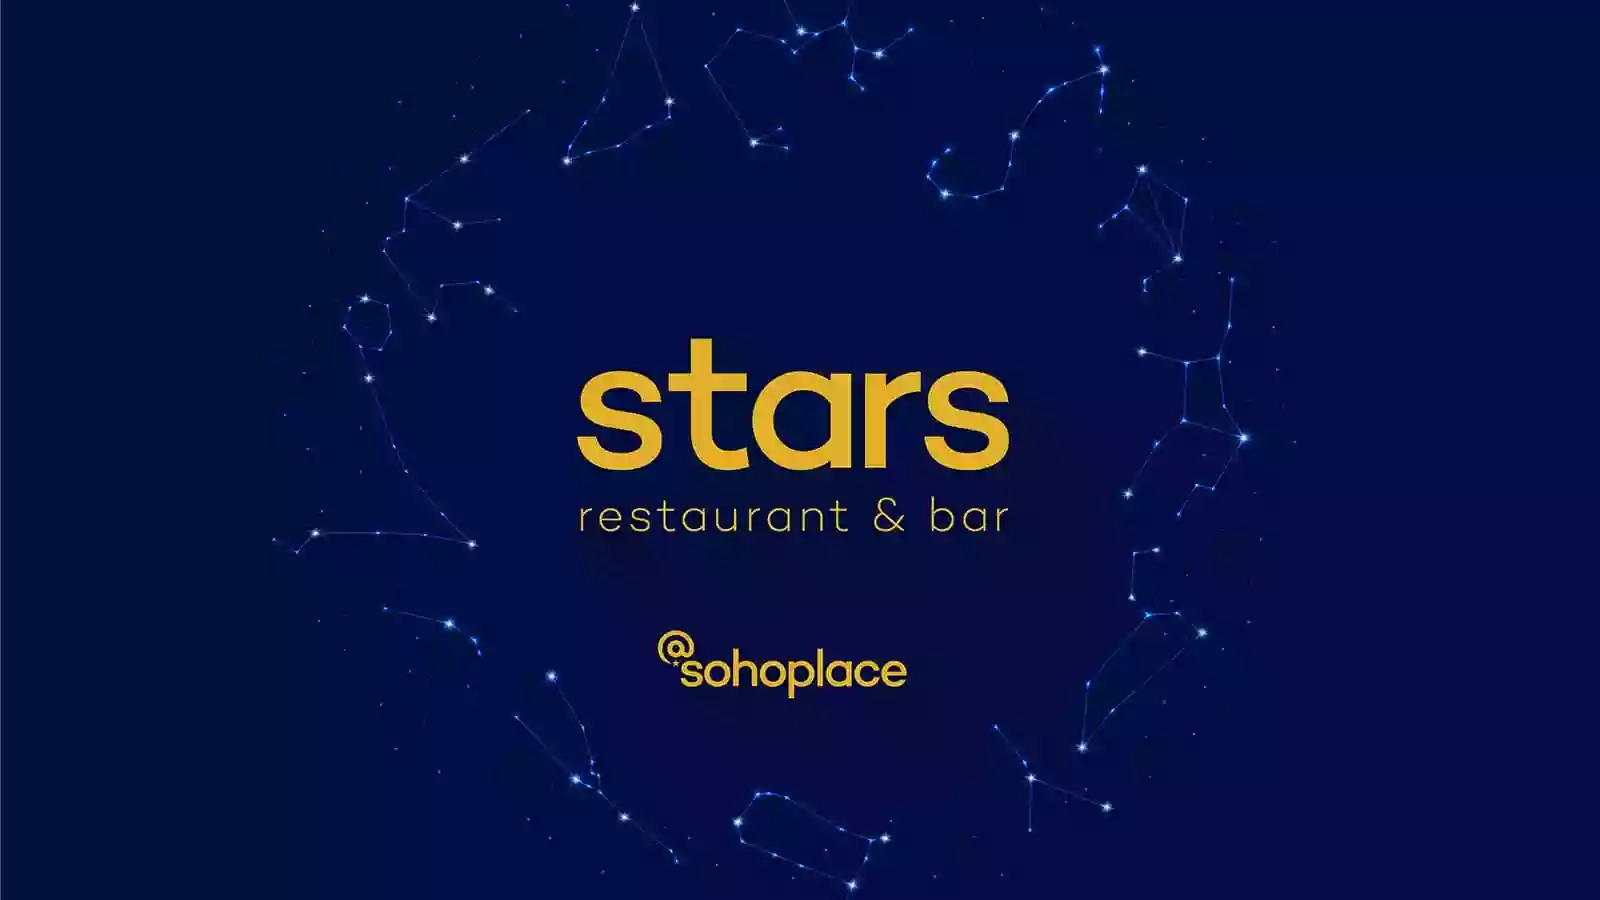 Stars Restaurant and Bar at Sohoplace